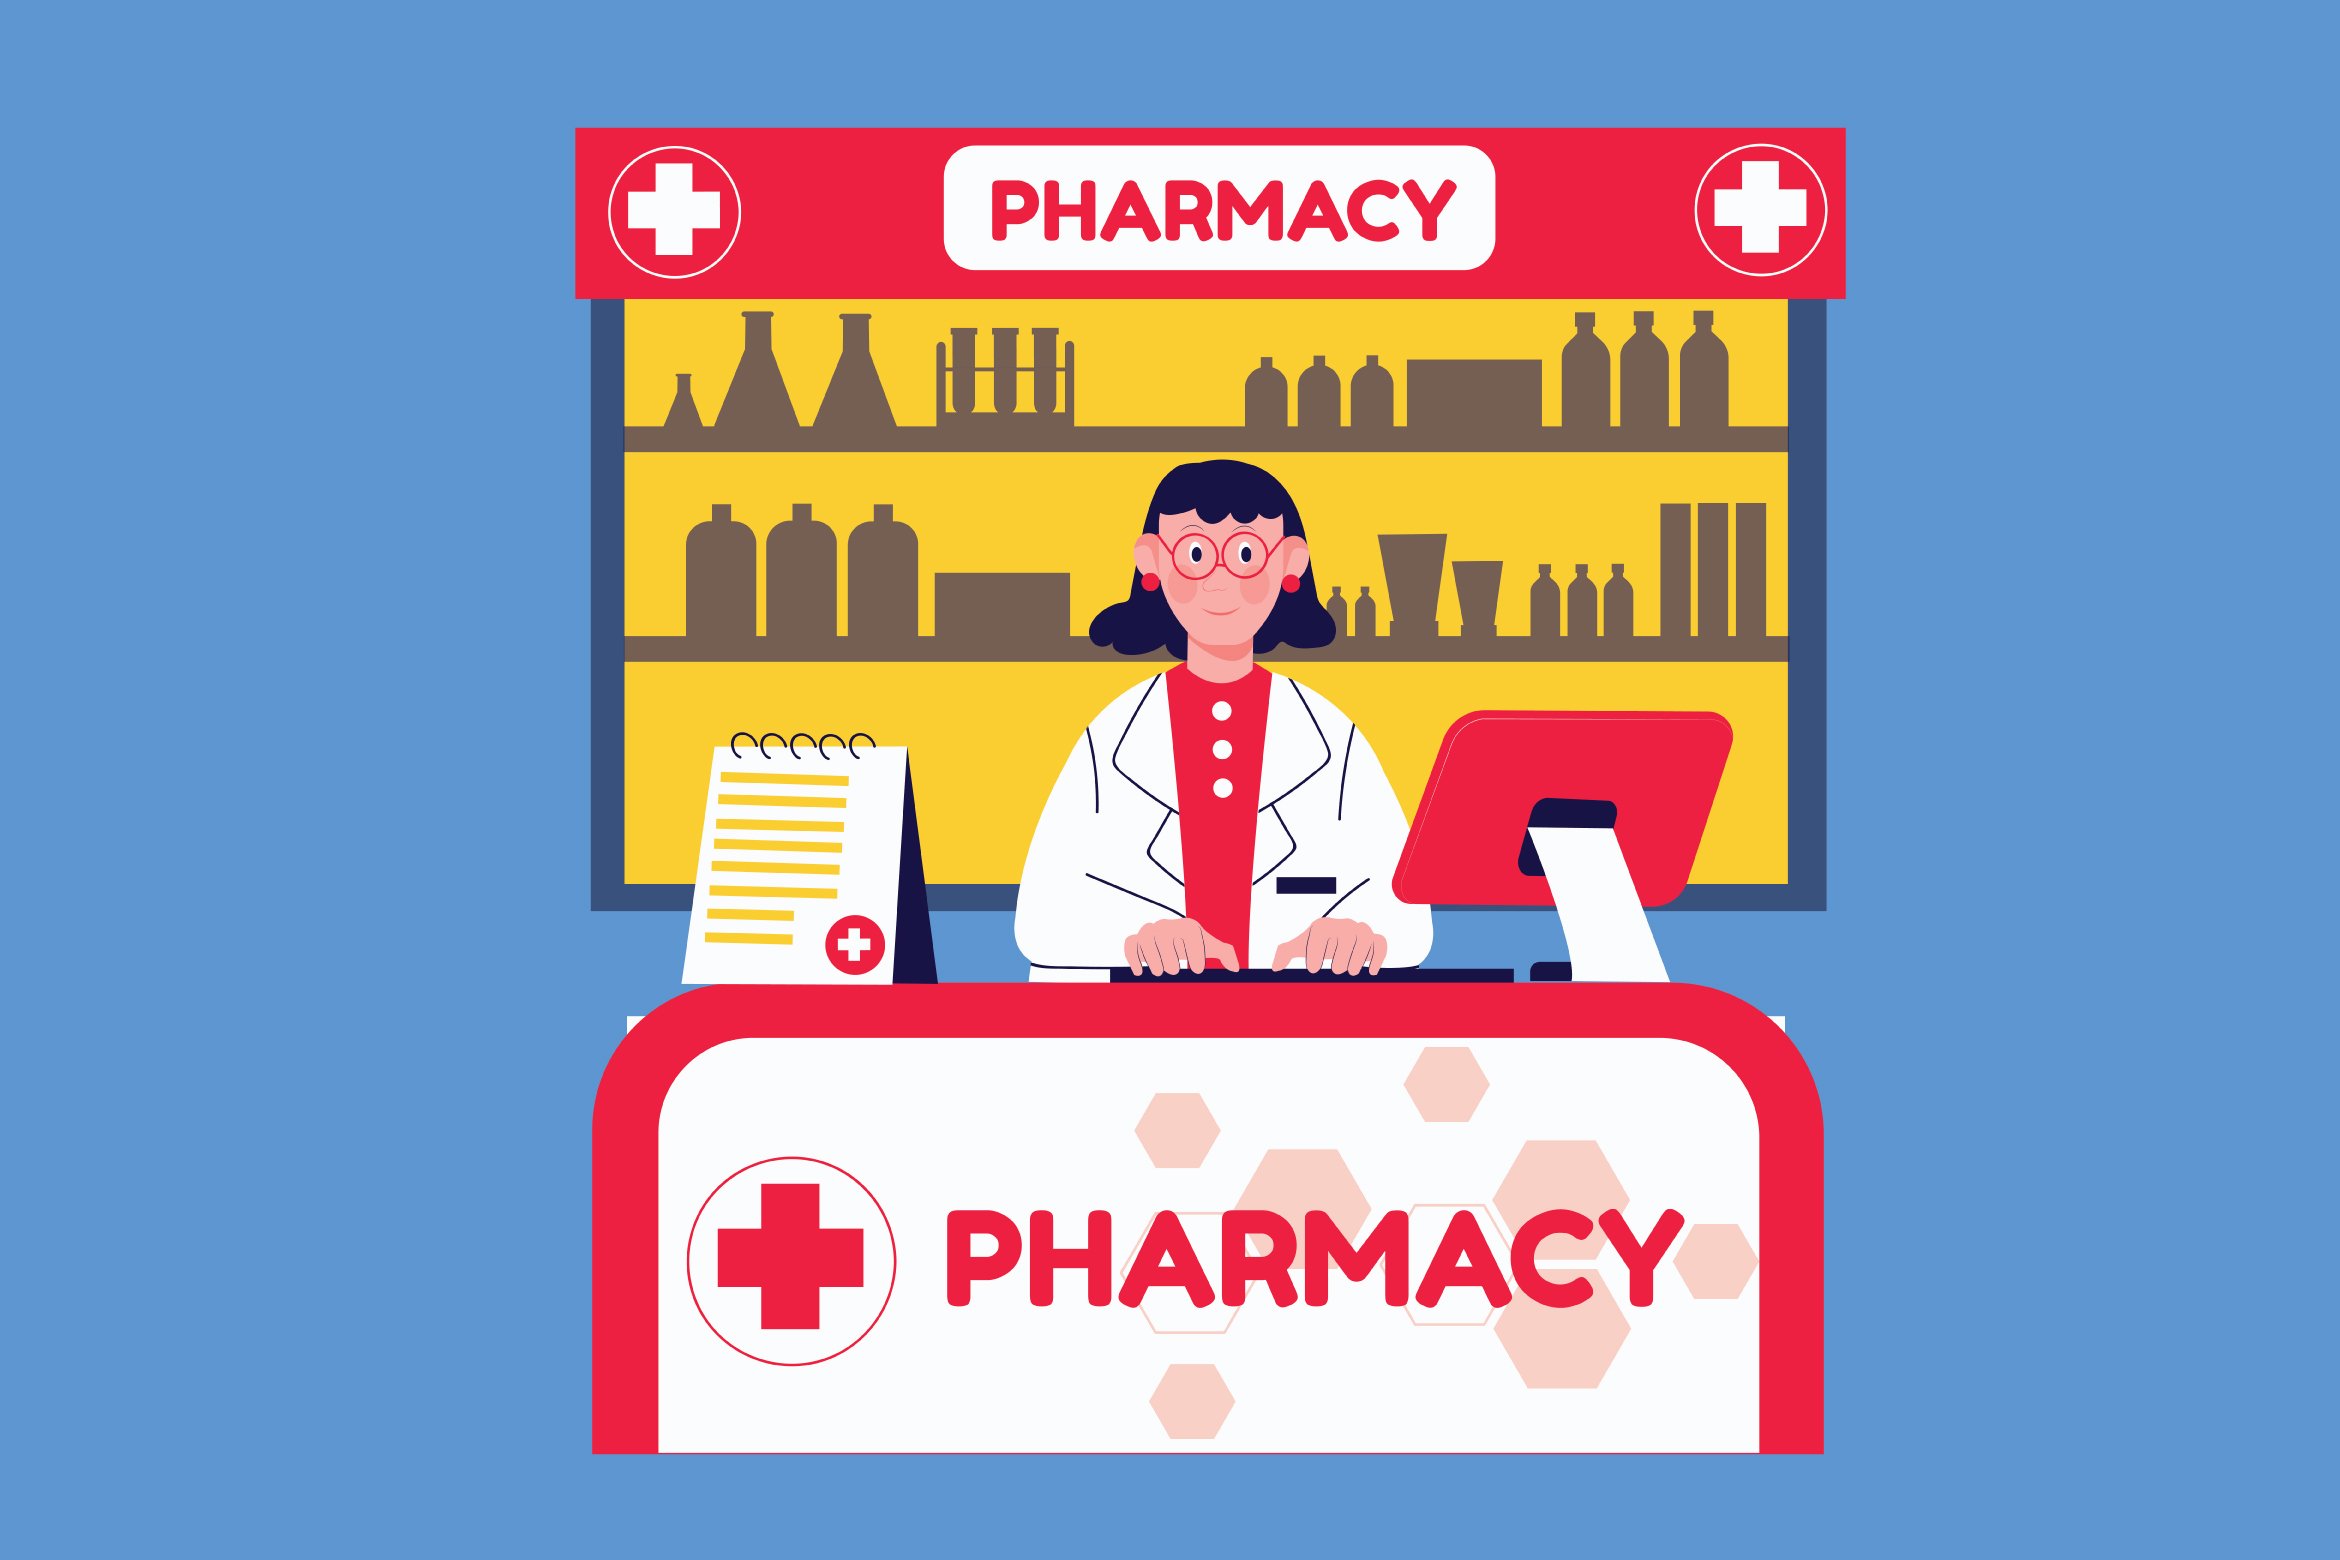 Pharmacist Illustration cover image.